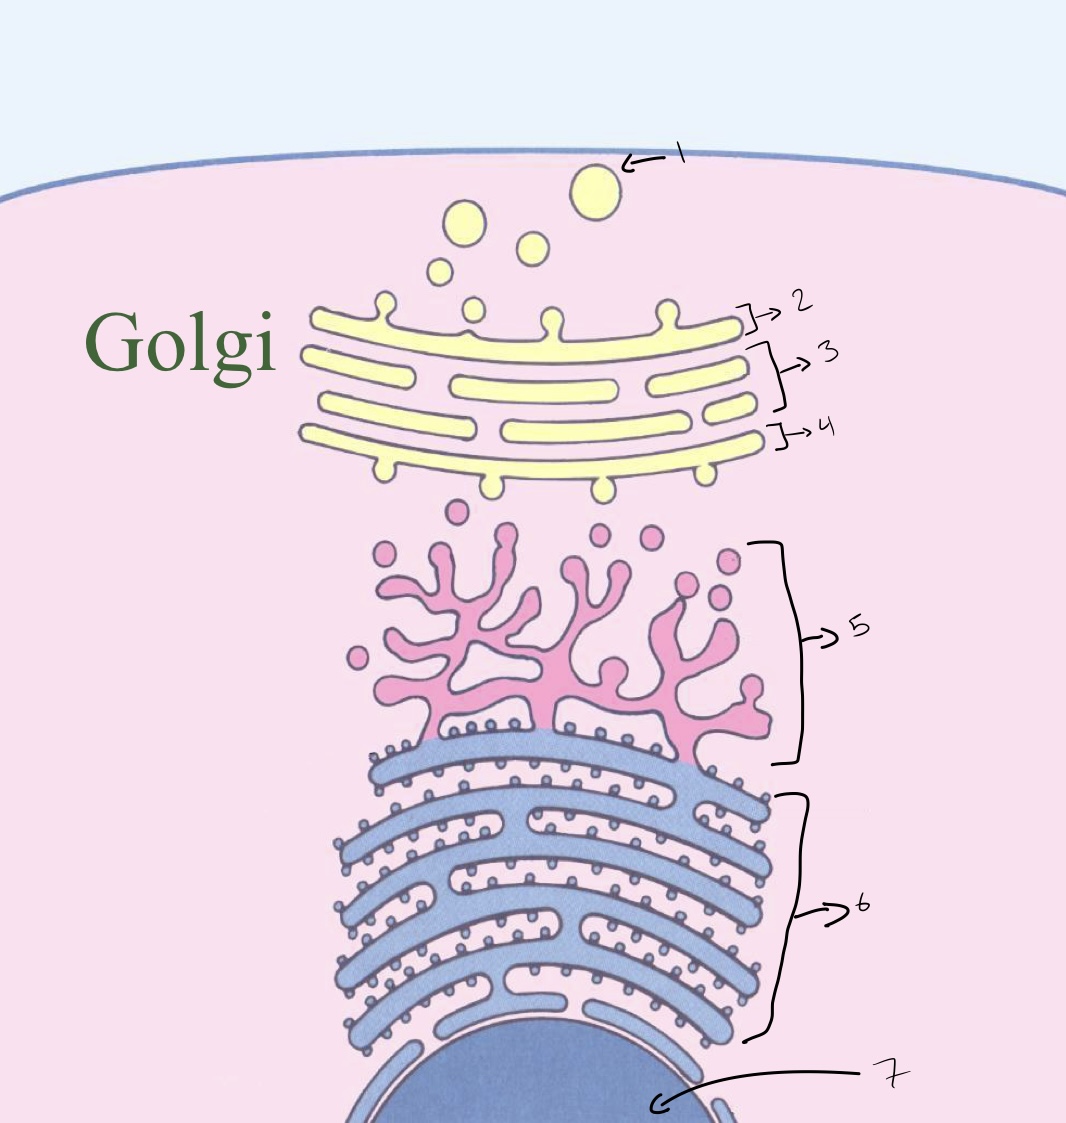 <p>1- vesicles that have bud off 2- trans golgi 3- mid golgi 4- cis golgi 5- smooth ER 6- rough ER 7- nucleus</p>